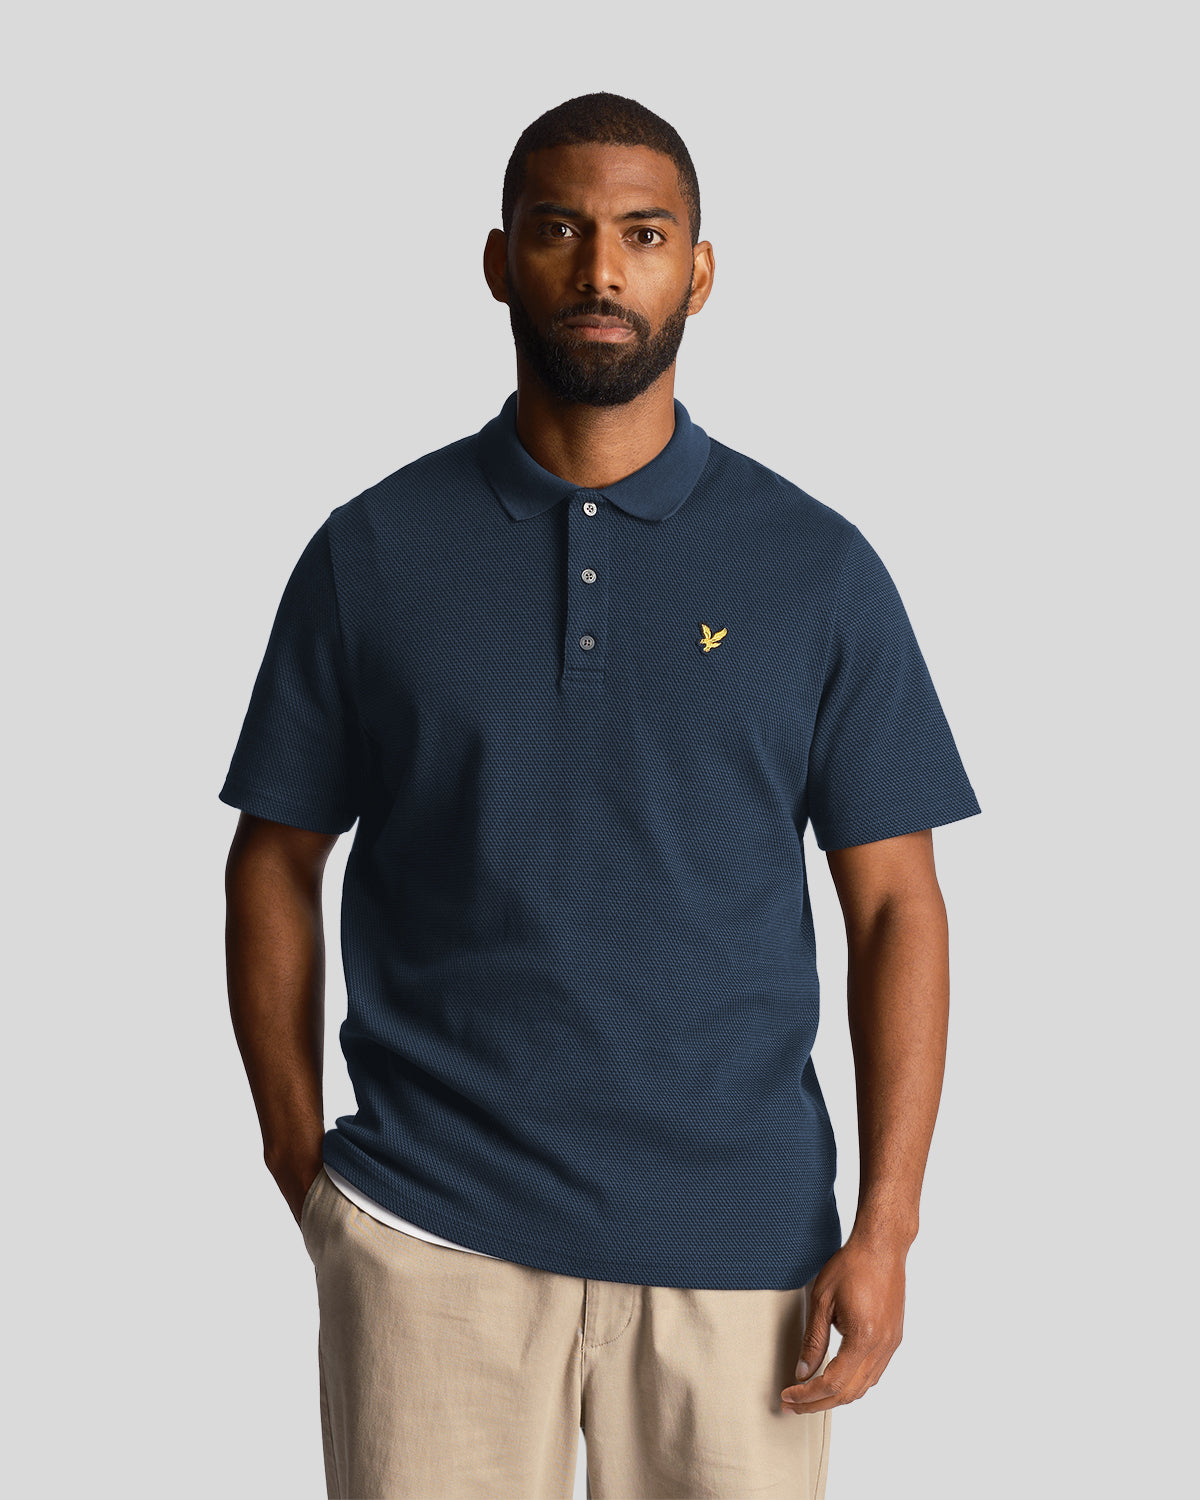 Lyle & Scott Mens Tonal Texture Polo Shirt in Blue - XXL product